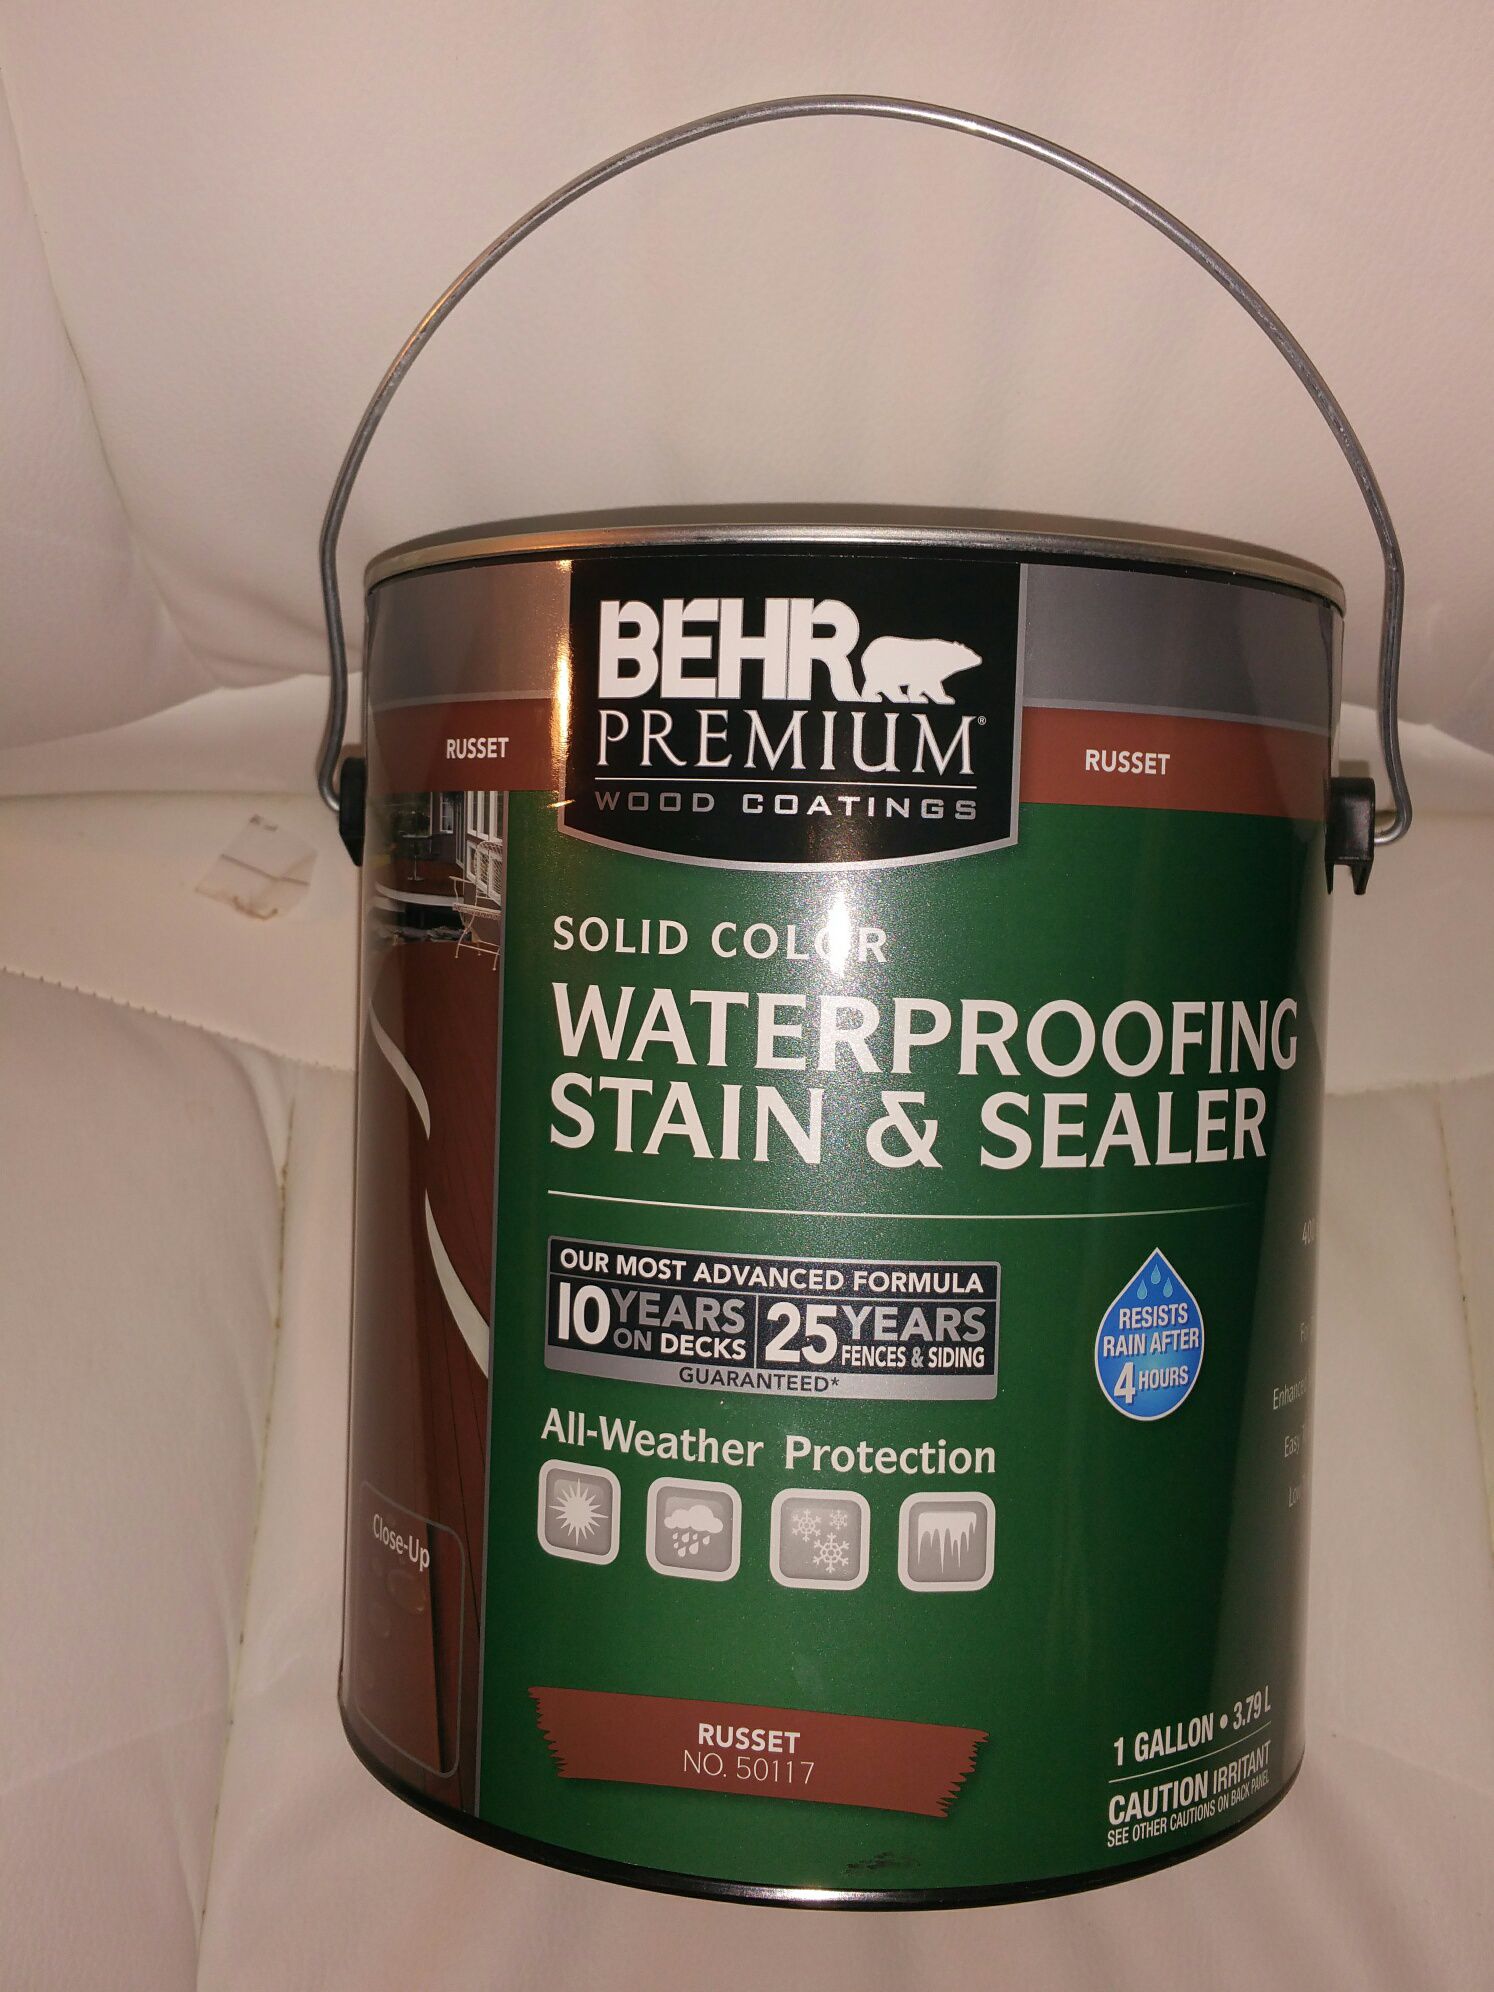 New BEHR Waterproofing Deck Stain and Sealer